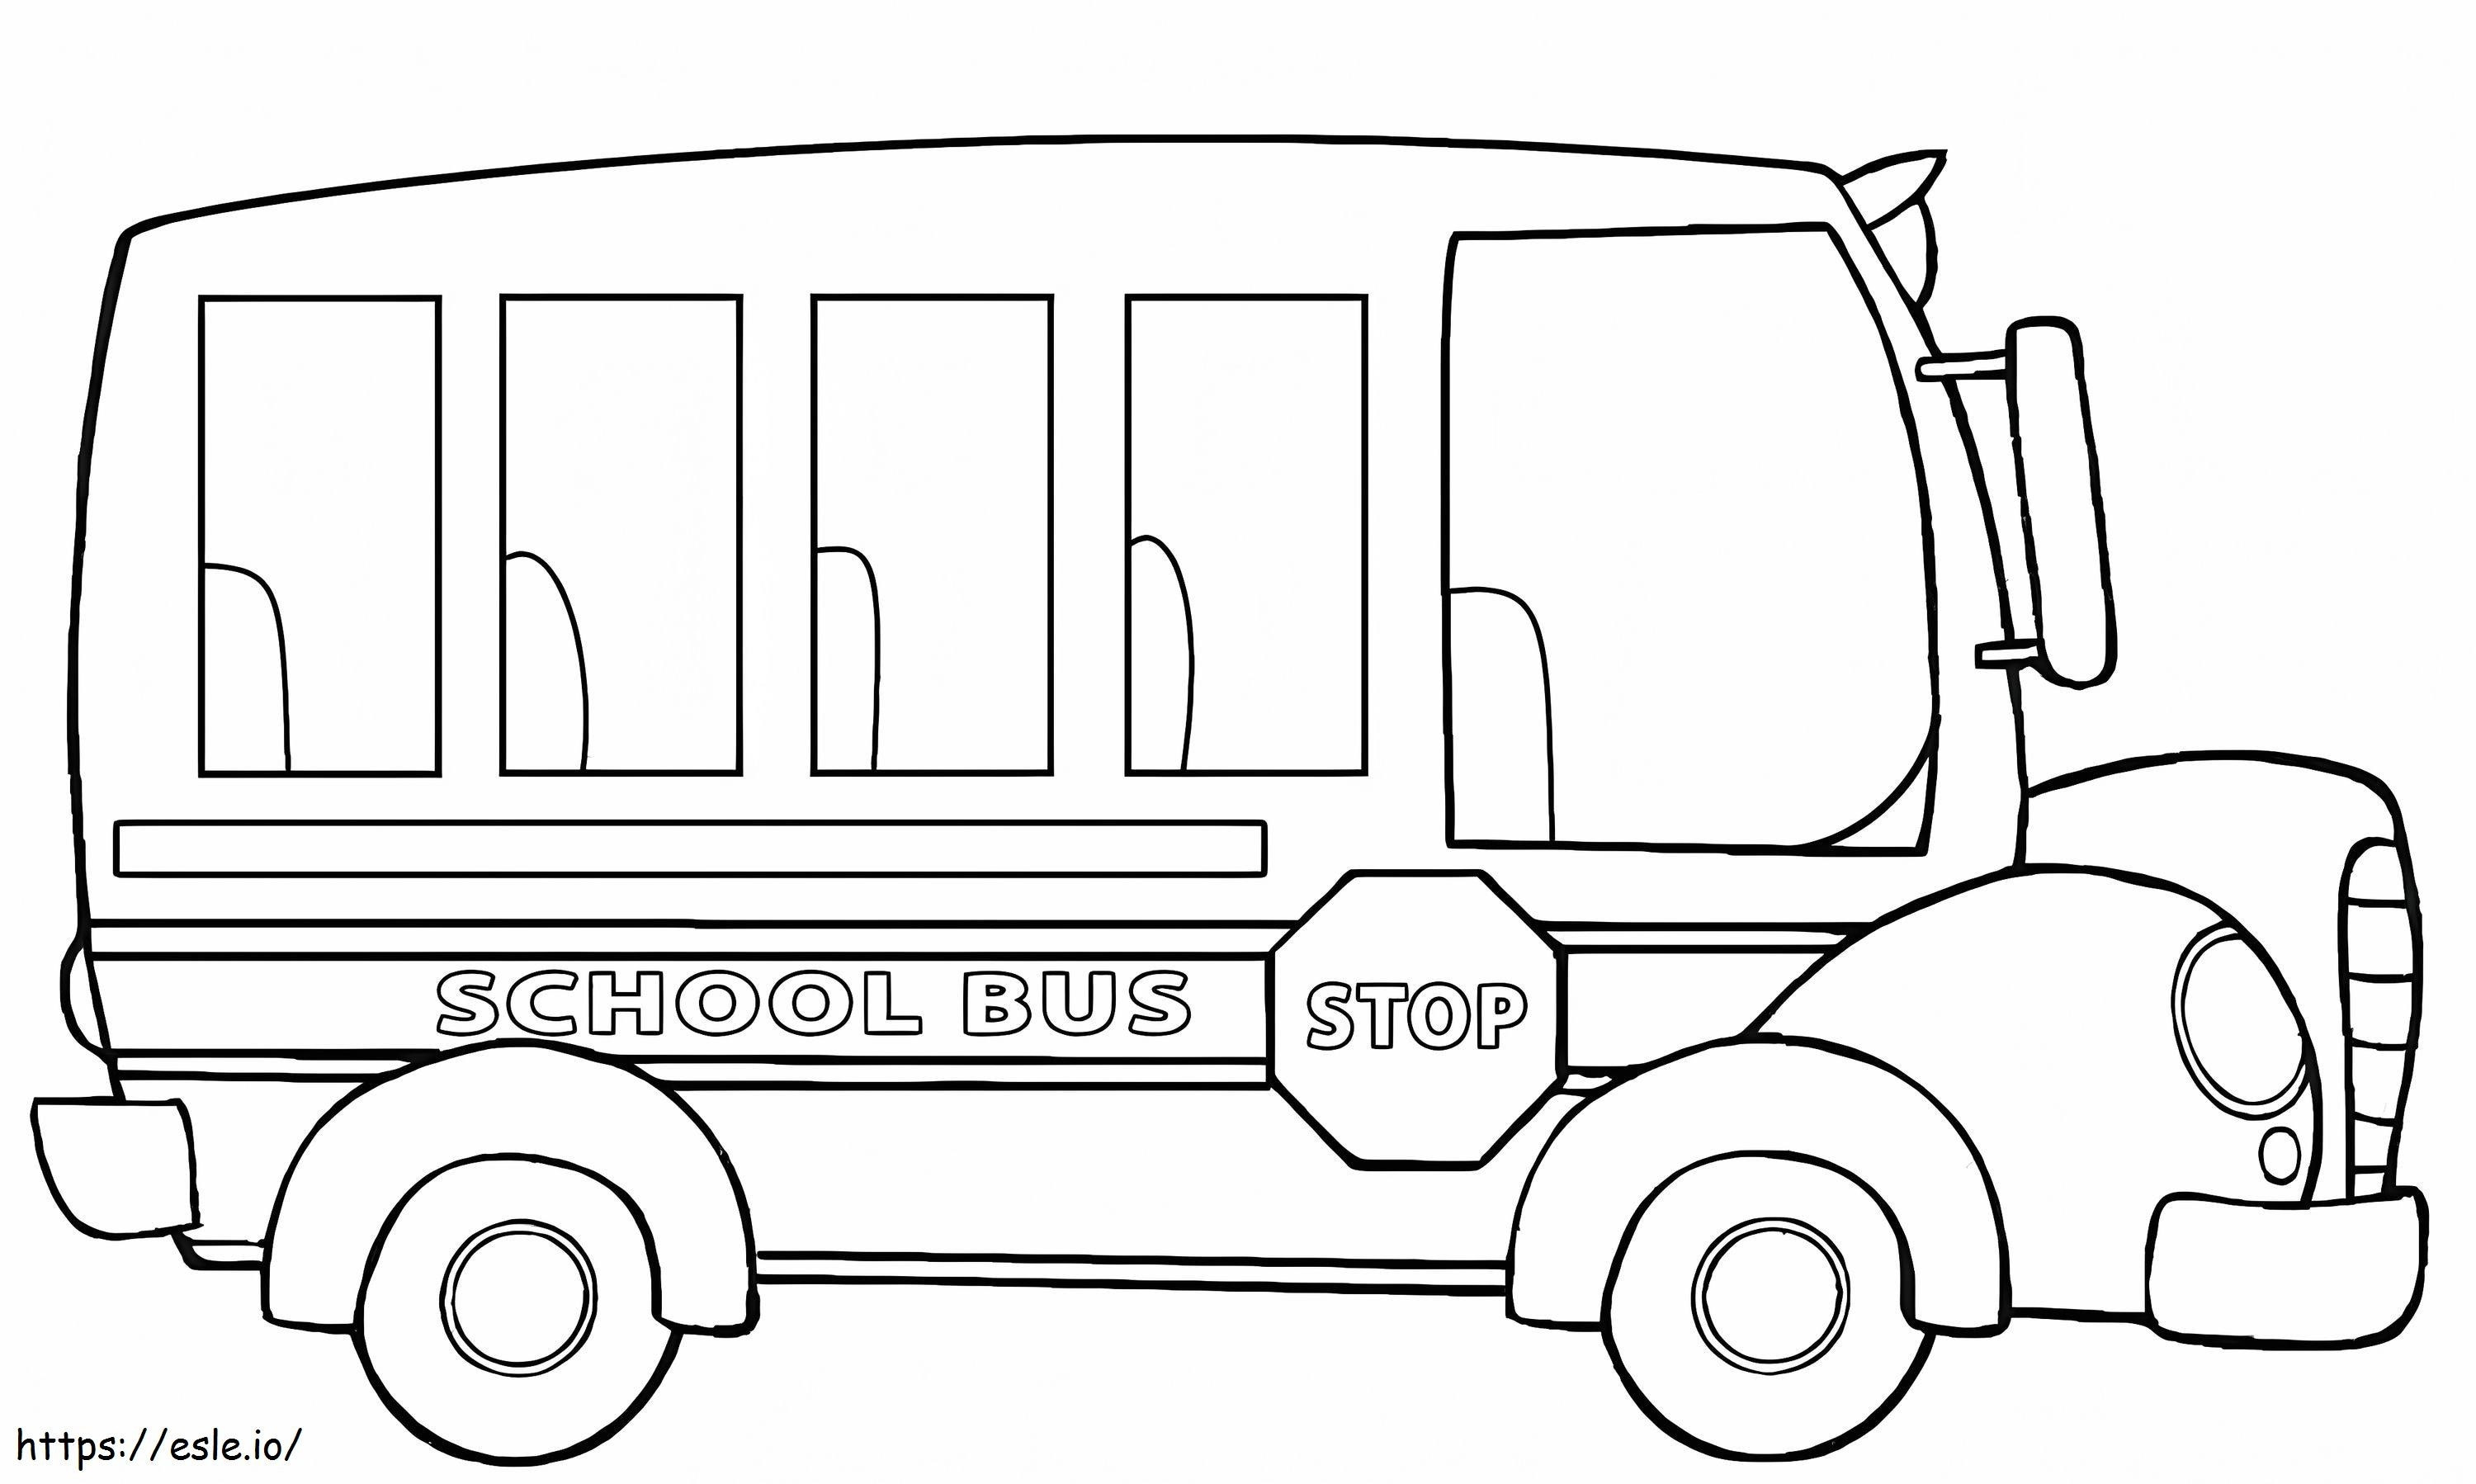 Amazing School Bus coloring page